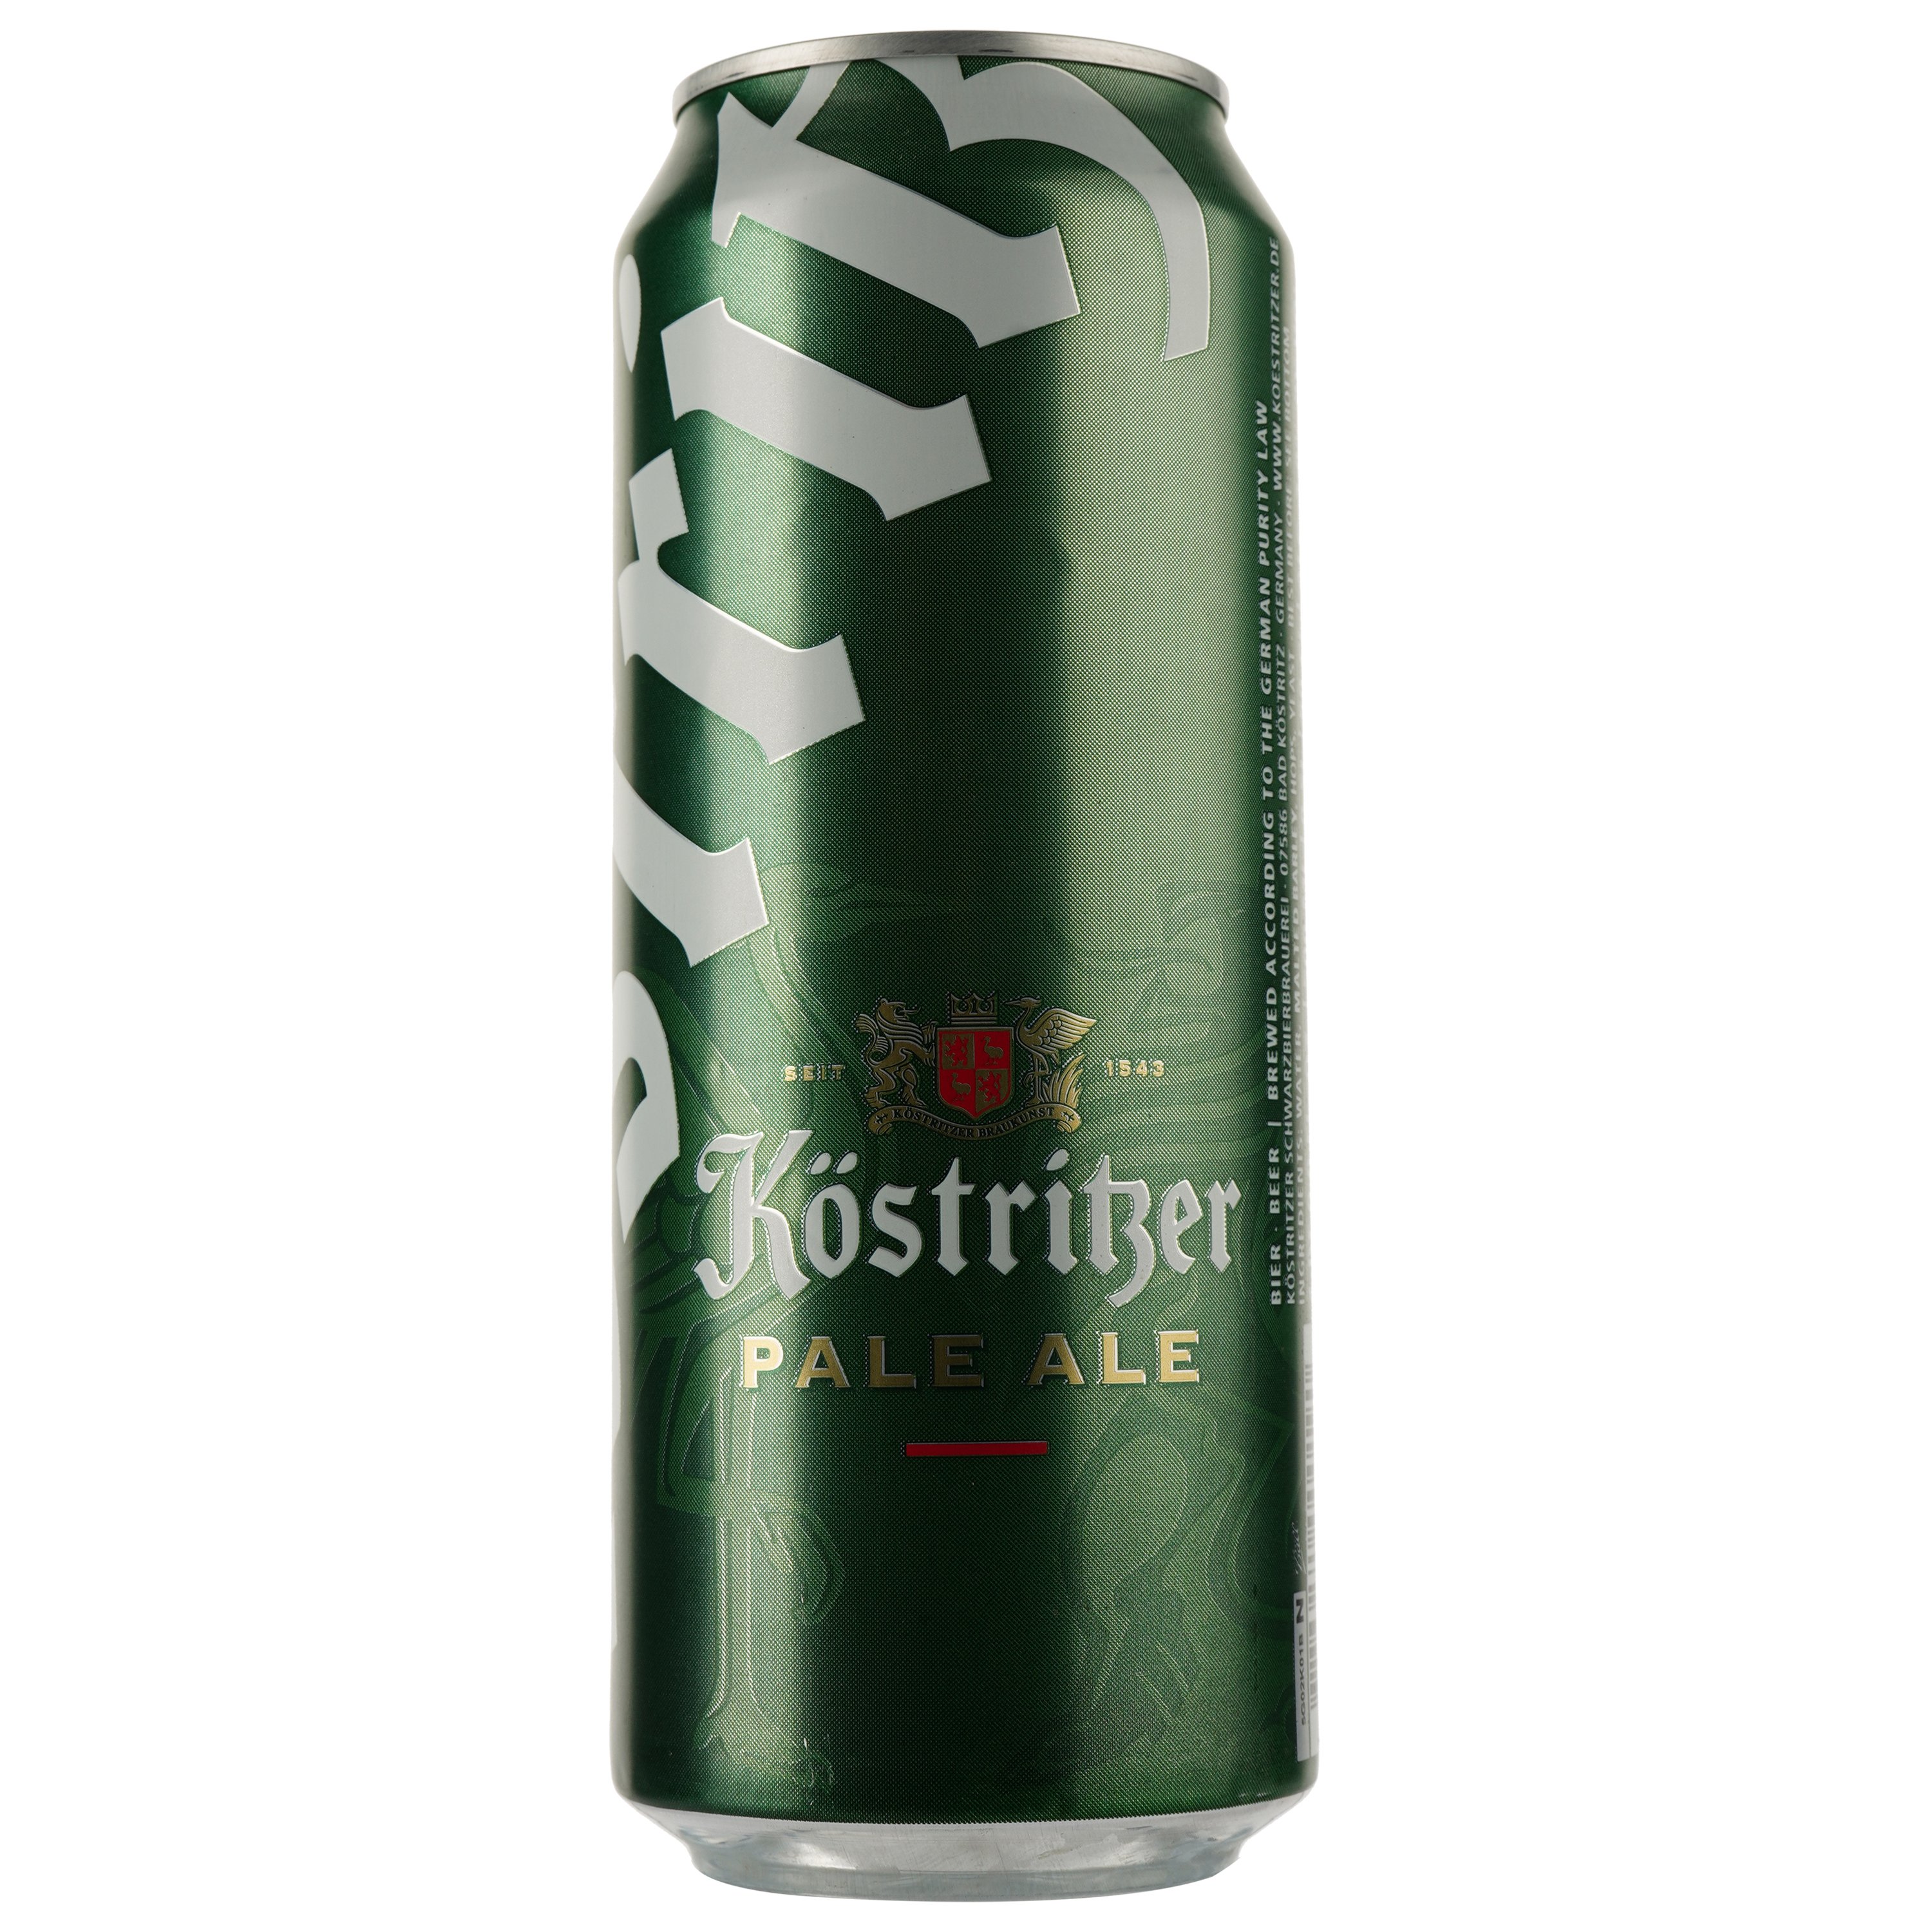 Пиво Kostritzer Pale Ale, светлое, нефильтрованное, 7%, ж/б, 0,5 л - фото 1